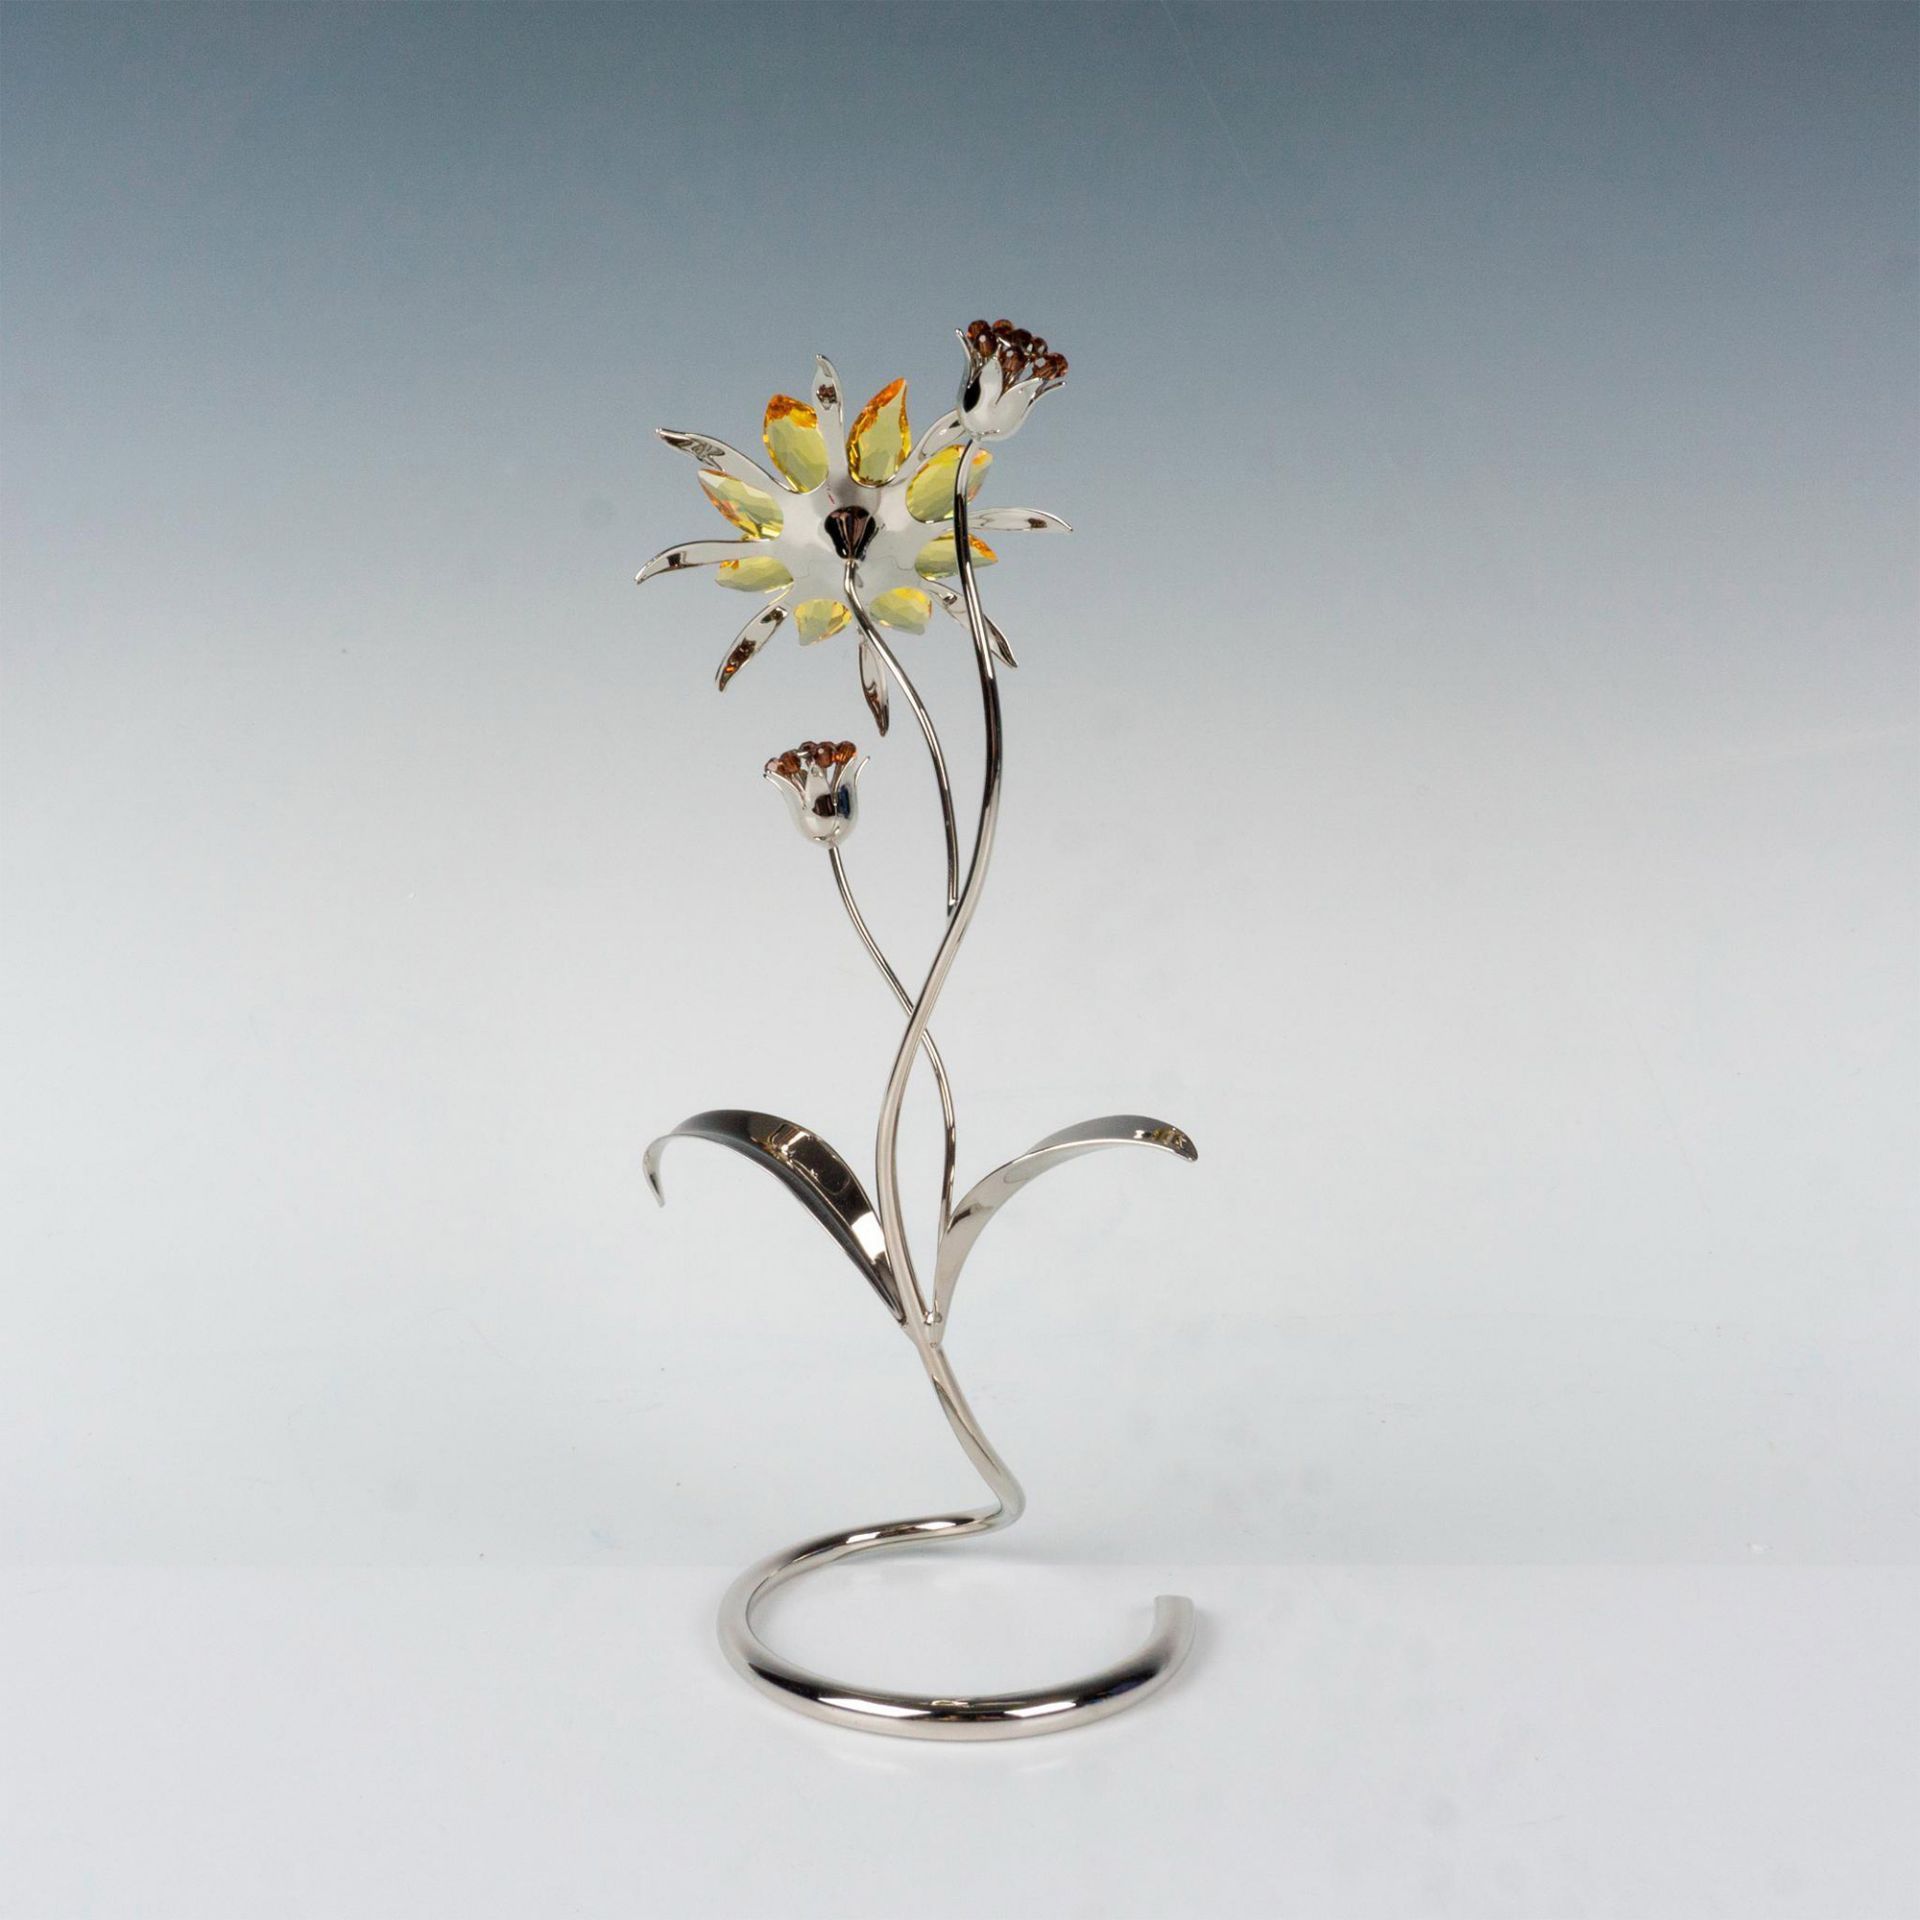 Swarovski Crystal Figurine, Darigold Flower - Image 2 of 4